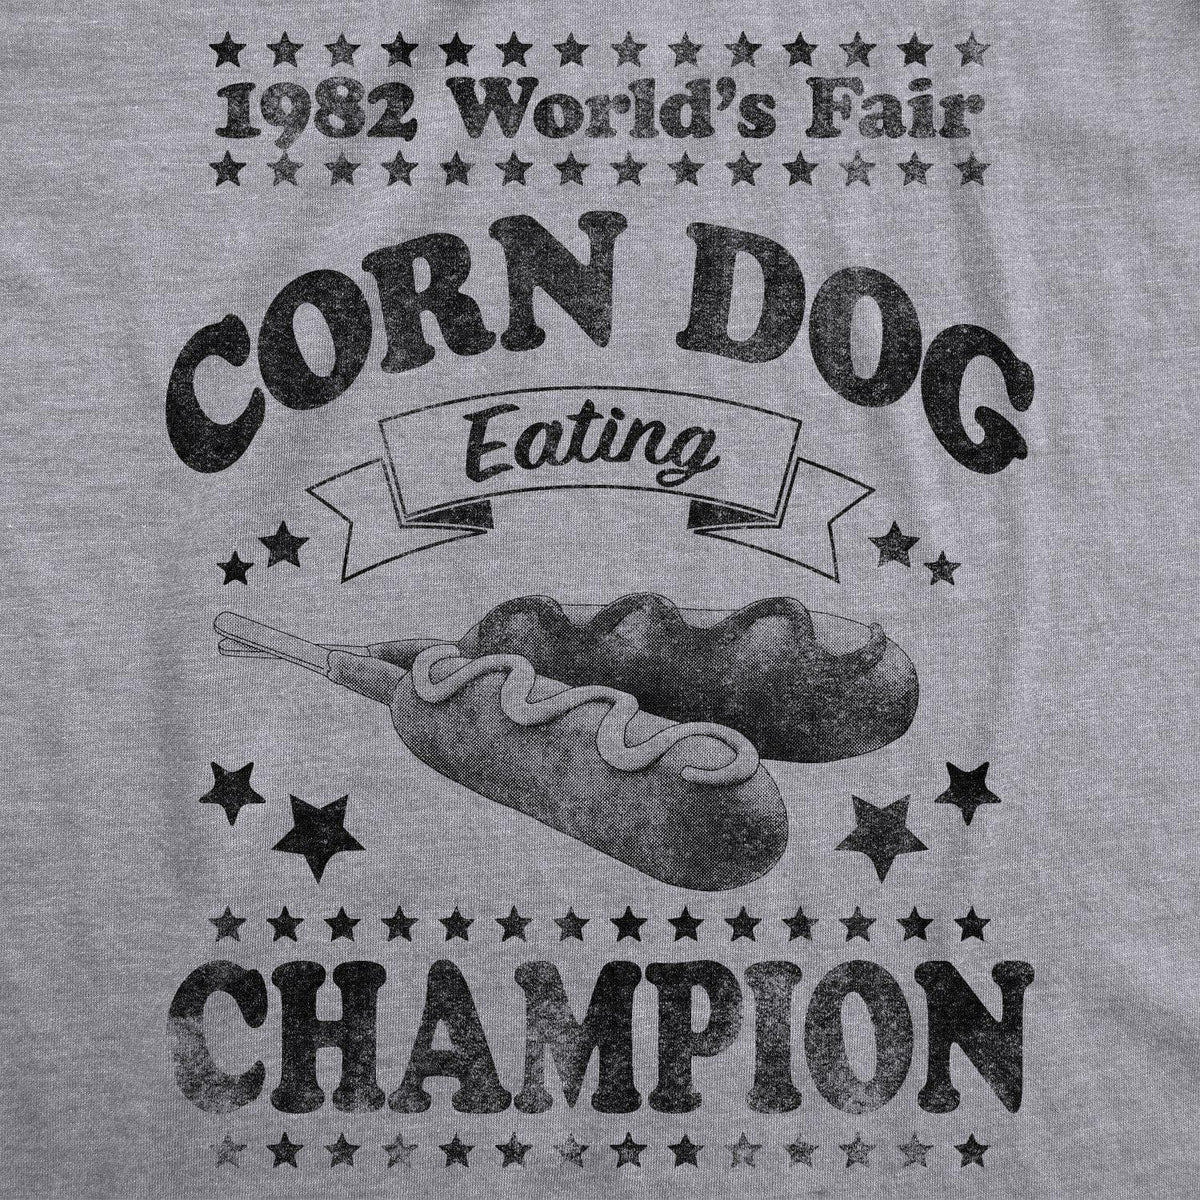 Corn Dog Eating Champion 1982 Men&#39;s Tshirt  -  Crazy Dog T-Shirts